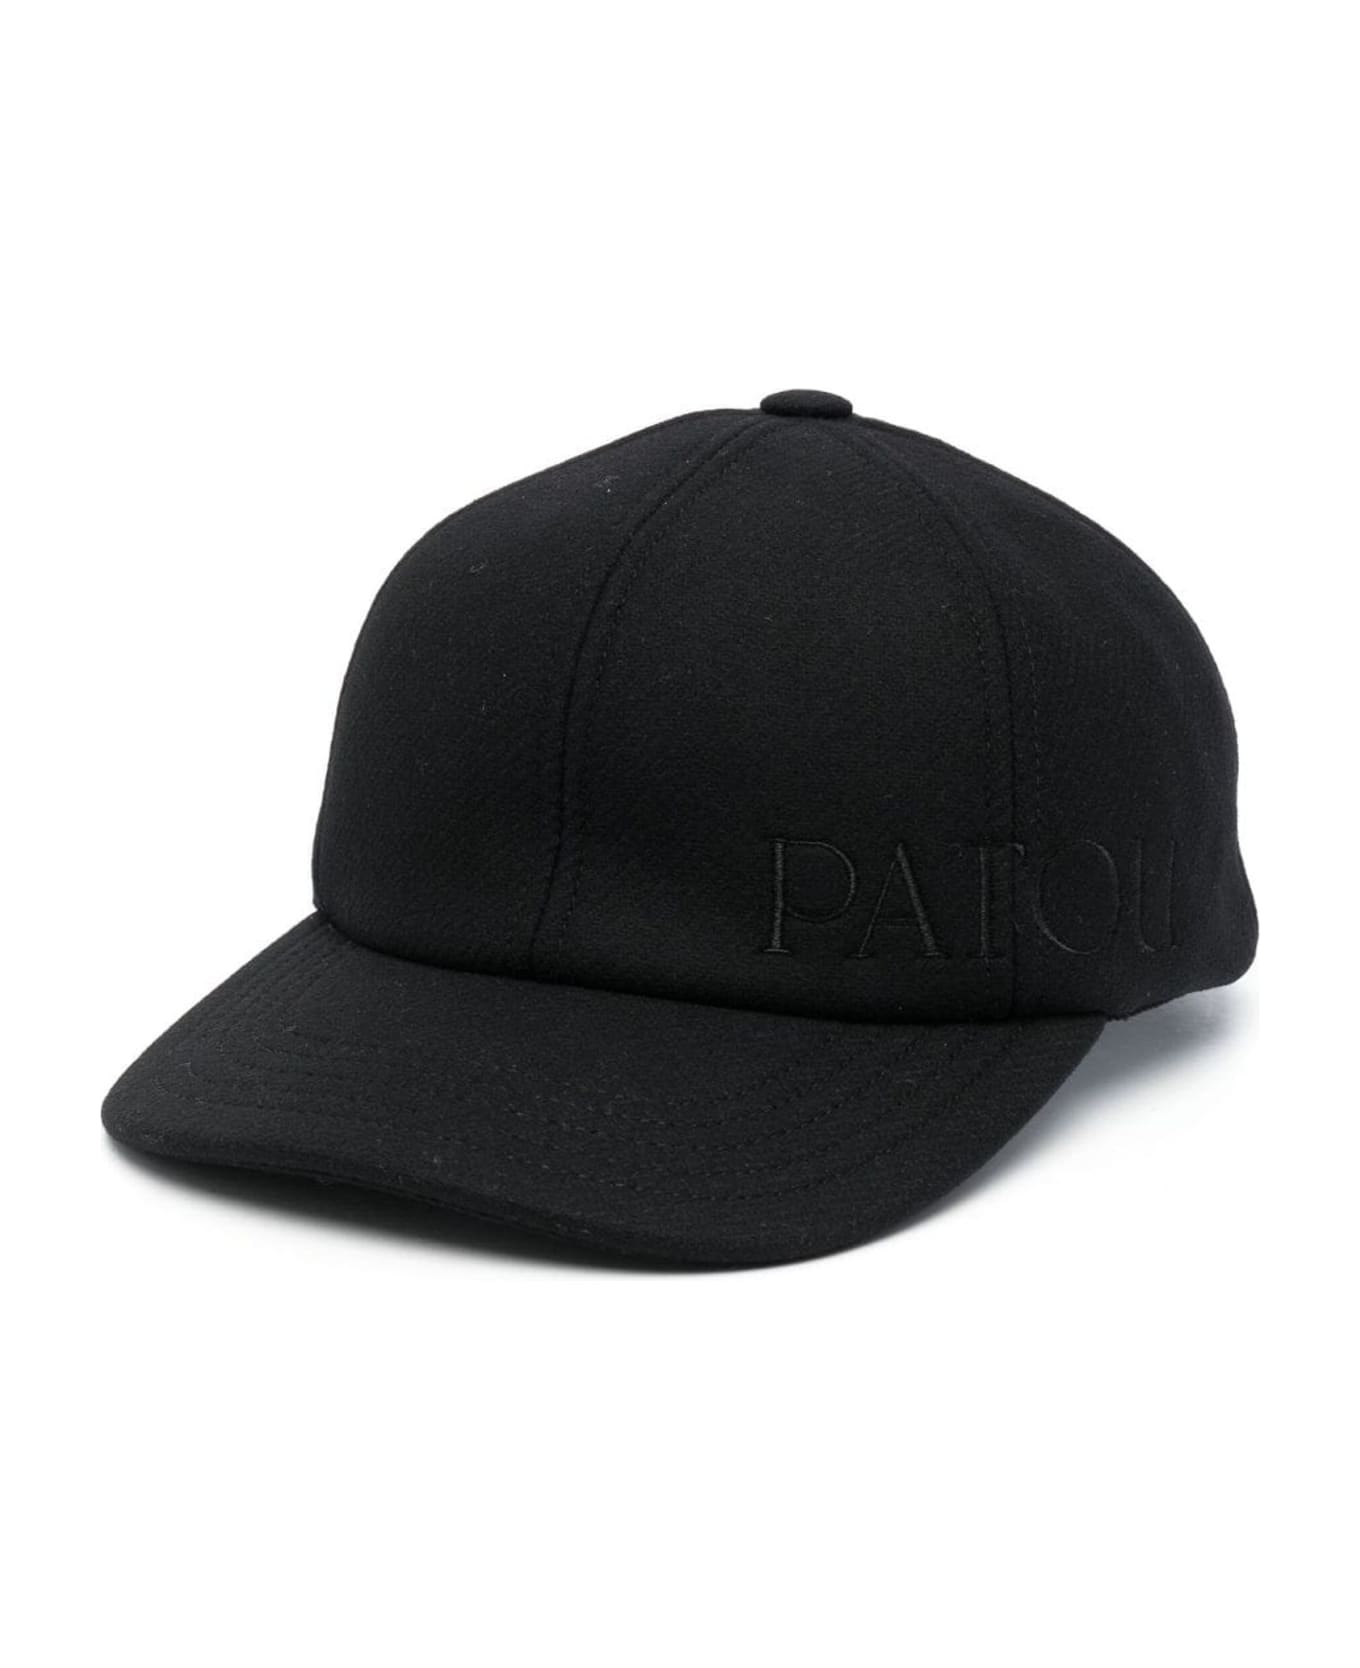 Patou Black Virgin Wool Blend Cap - Black